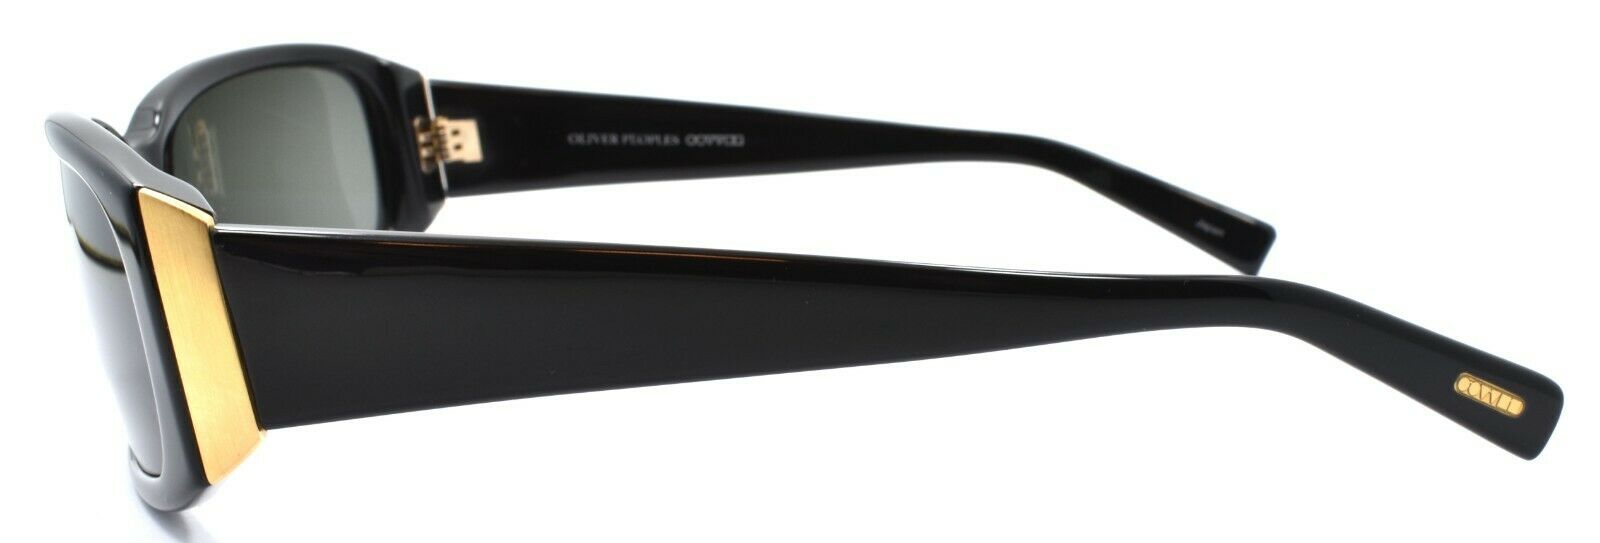 3-Oliver Peoples Jezebelle BK/G Women's Sunglasses Black / Gray Polarized JAPAN-Does not apply-IKSpecs